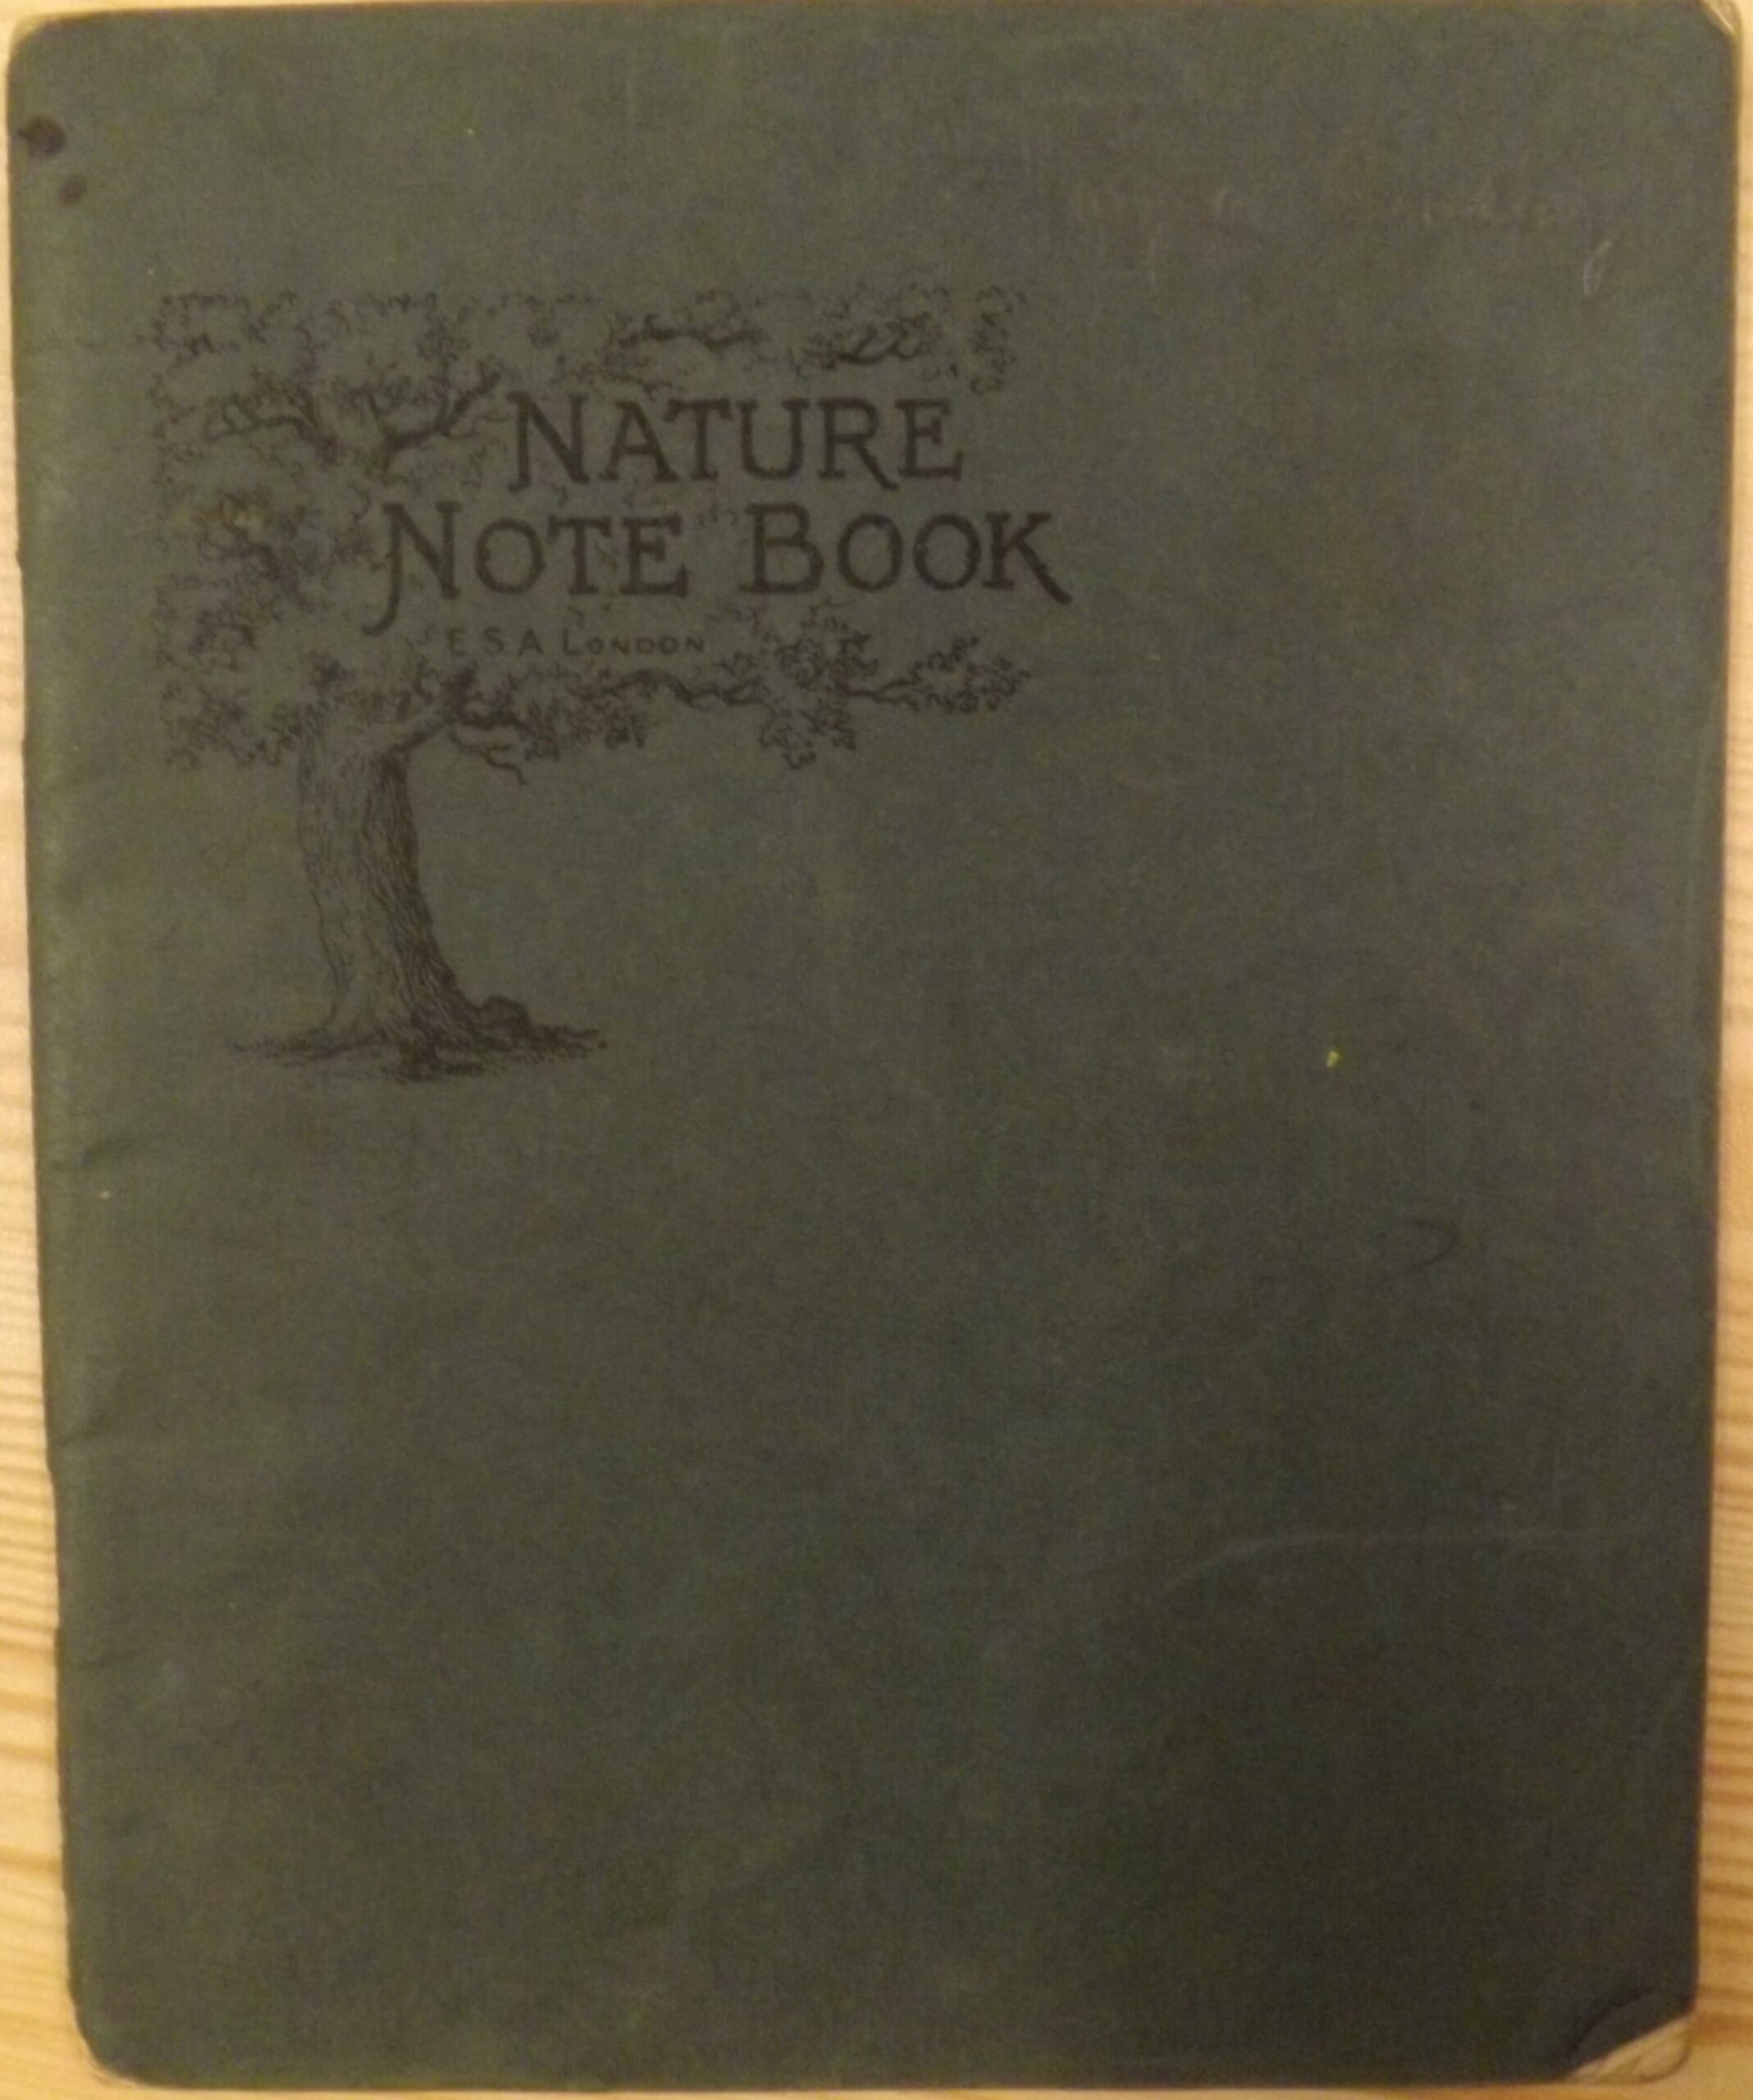 Joyce Anstey's 'Nature Note Book', the Hall School, Weybridge c.1930s.